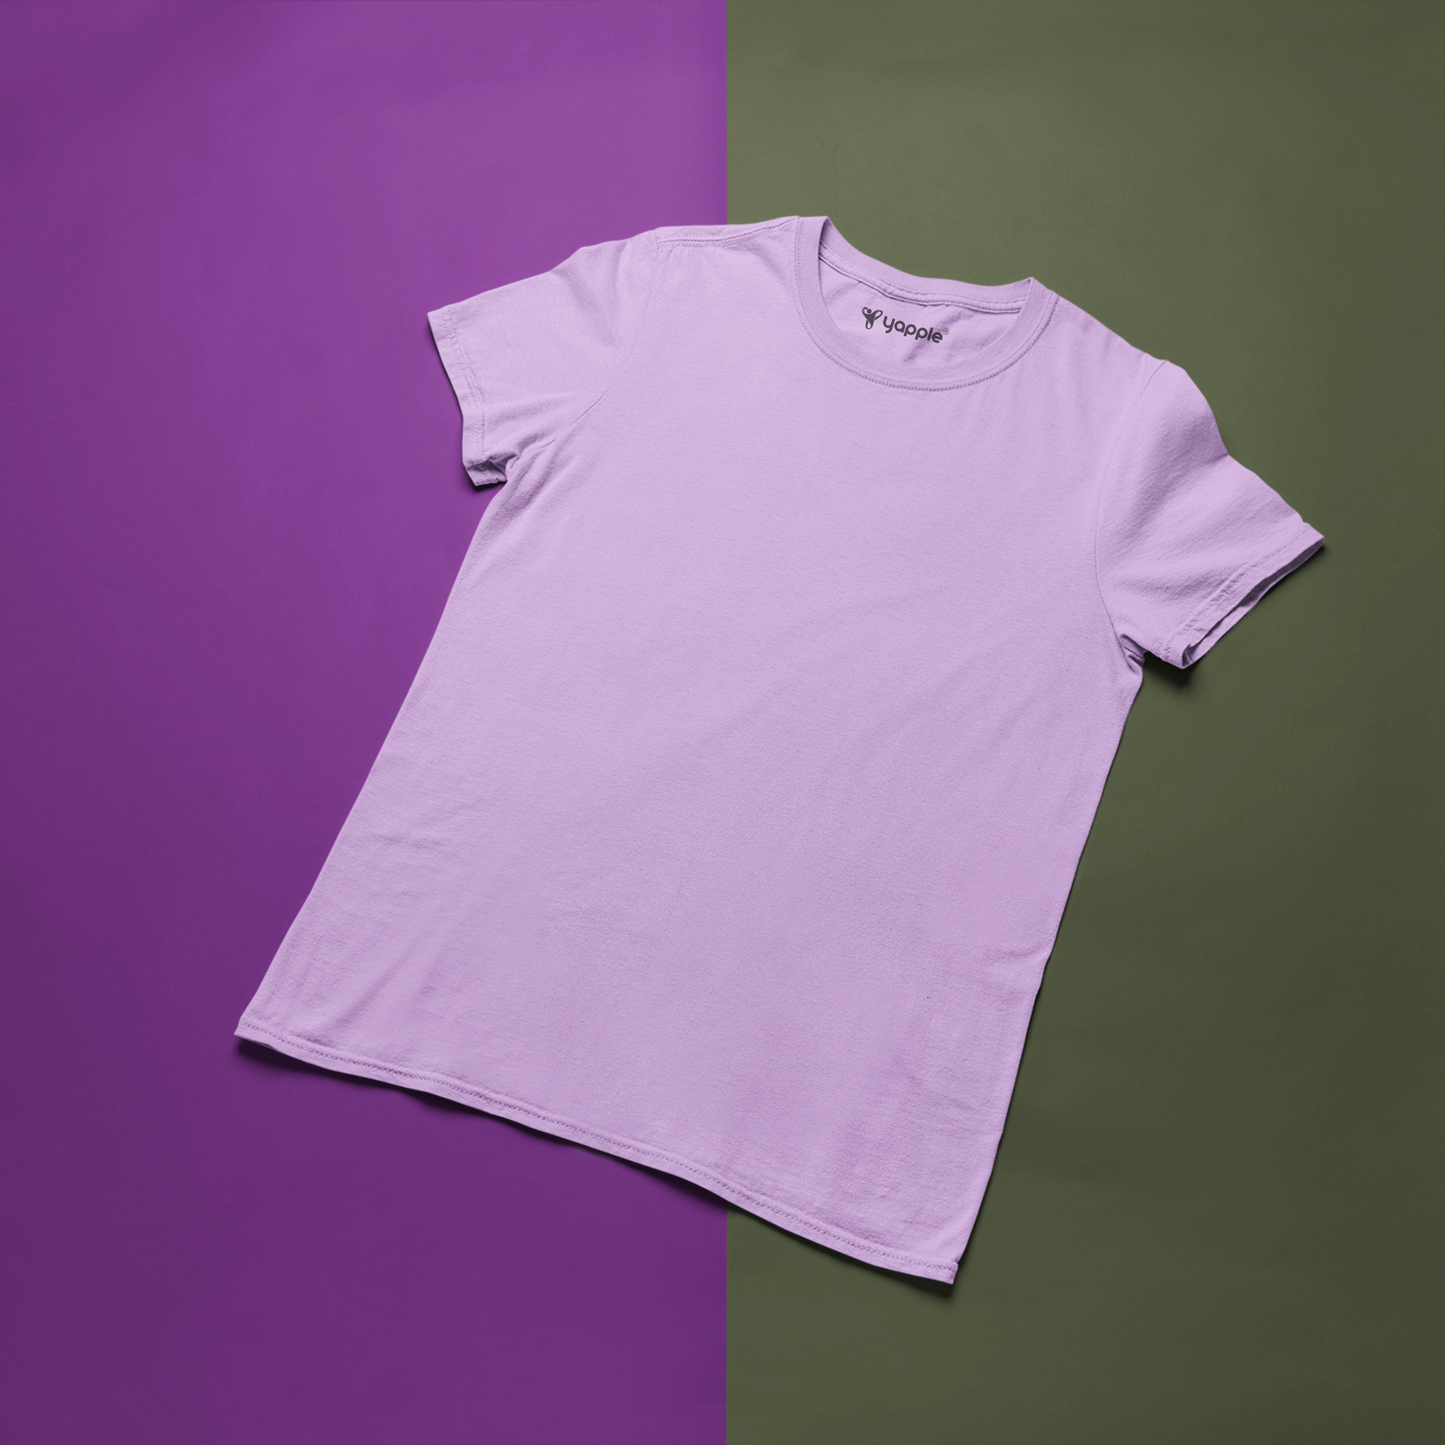 Men's 2-Pack Crewneck T-Shirt : Green & Purple